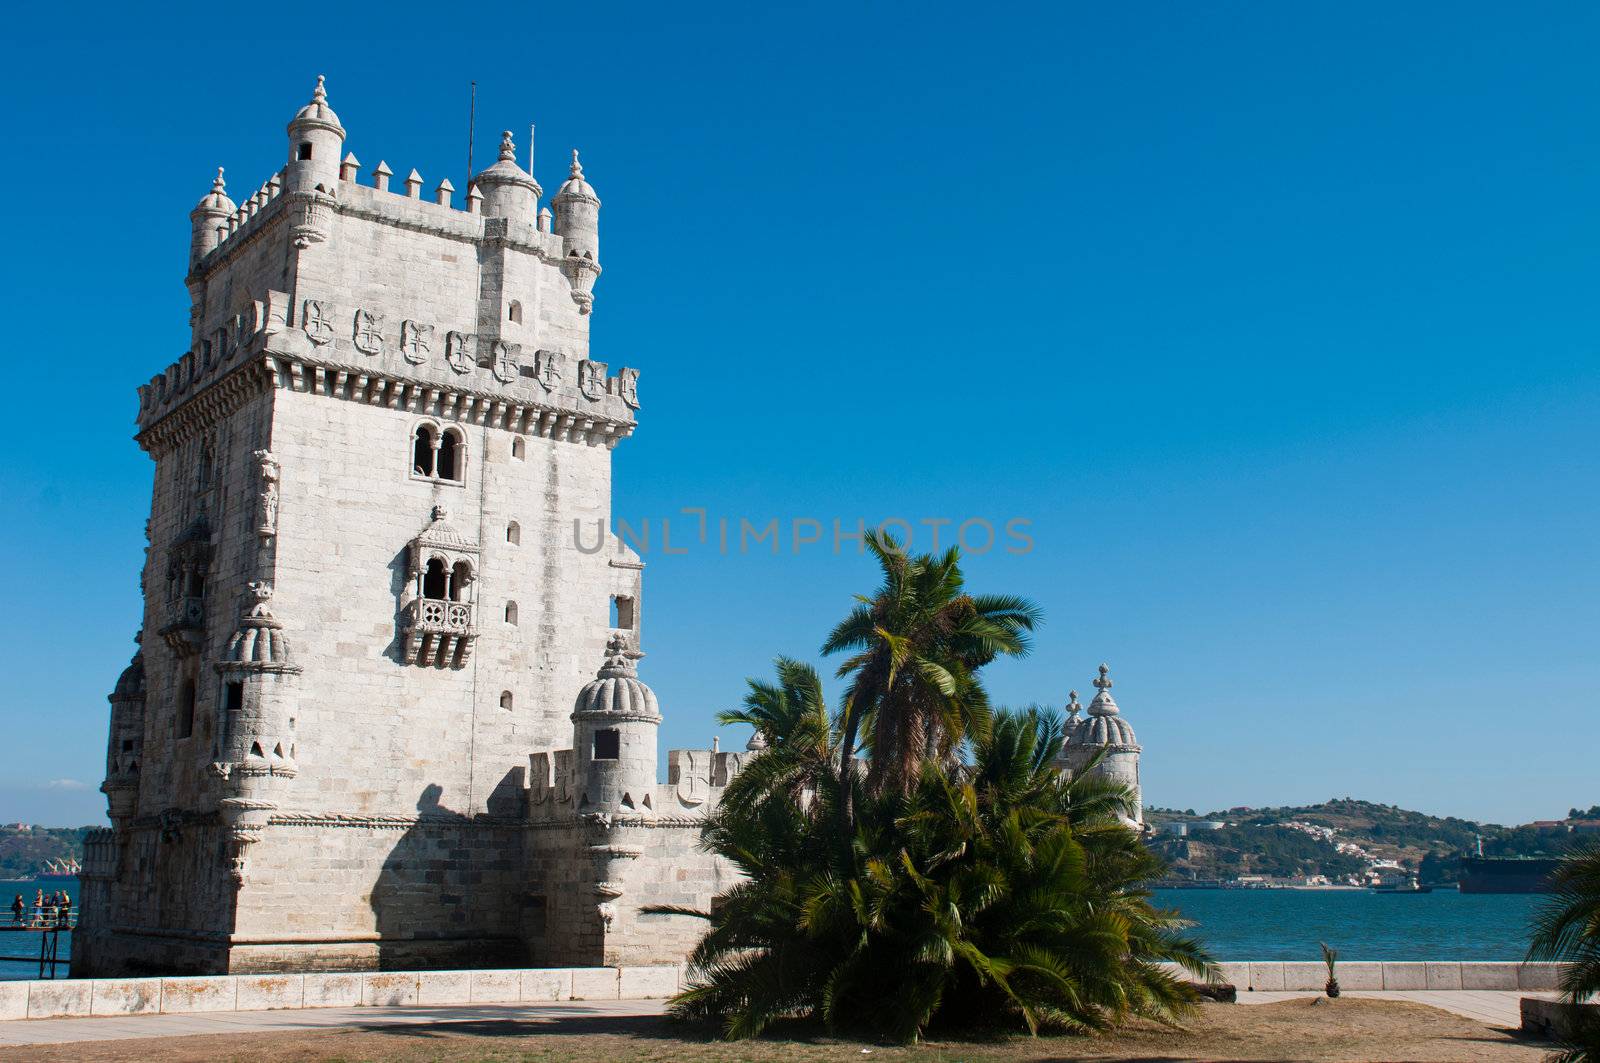 Belem Tower in Lisbon by luissantos84